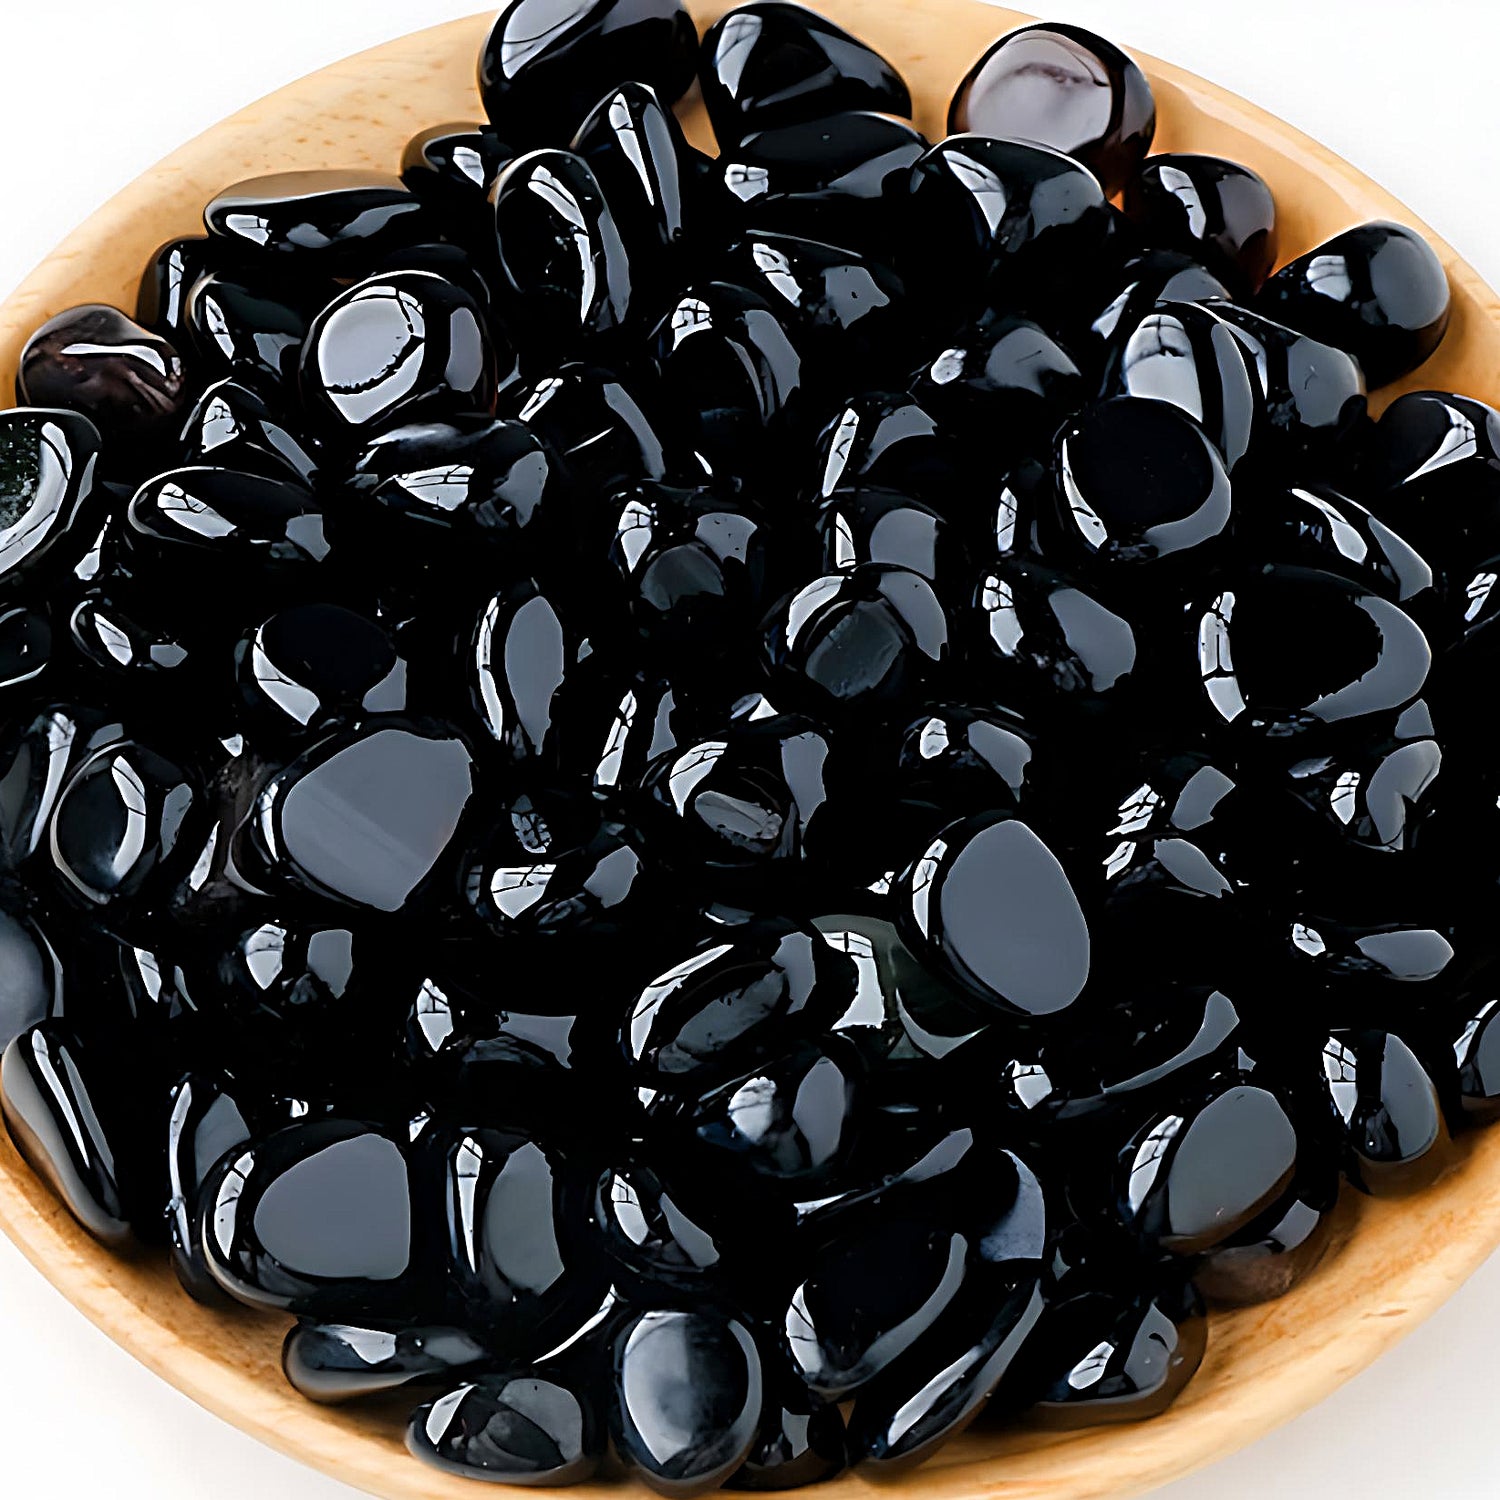 semi-precious tumbled stones in a bamboo bowl: obsidian